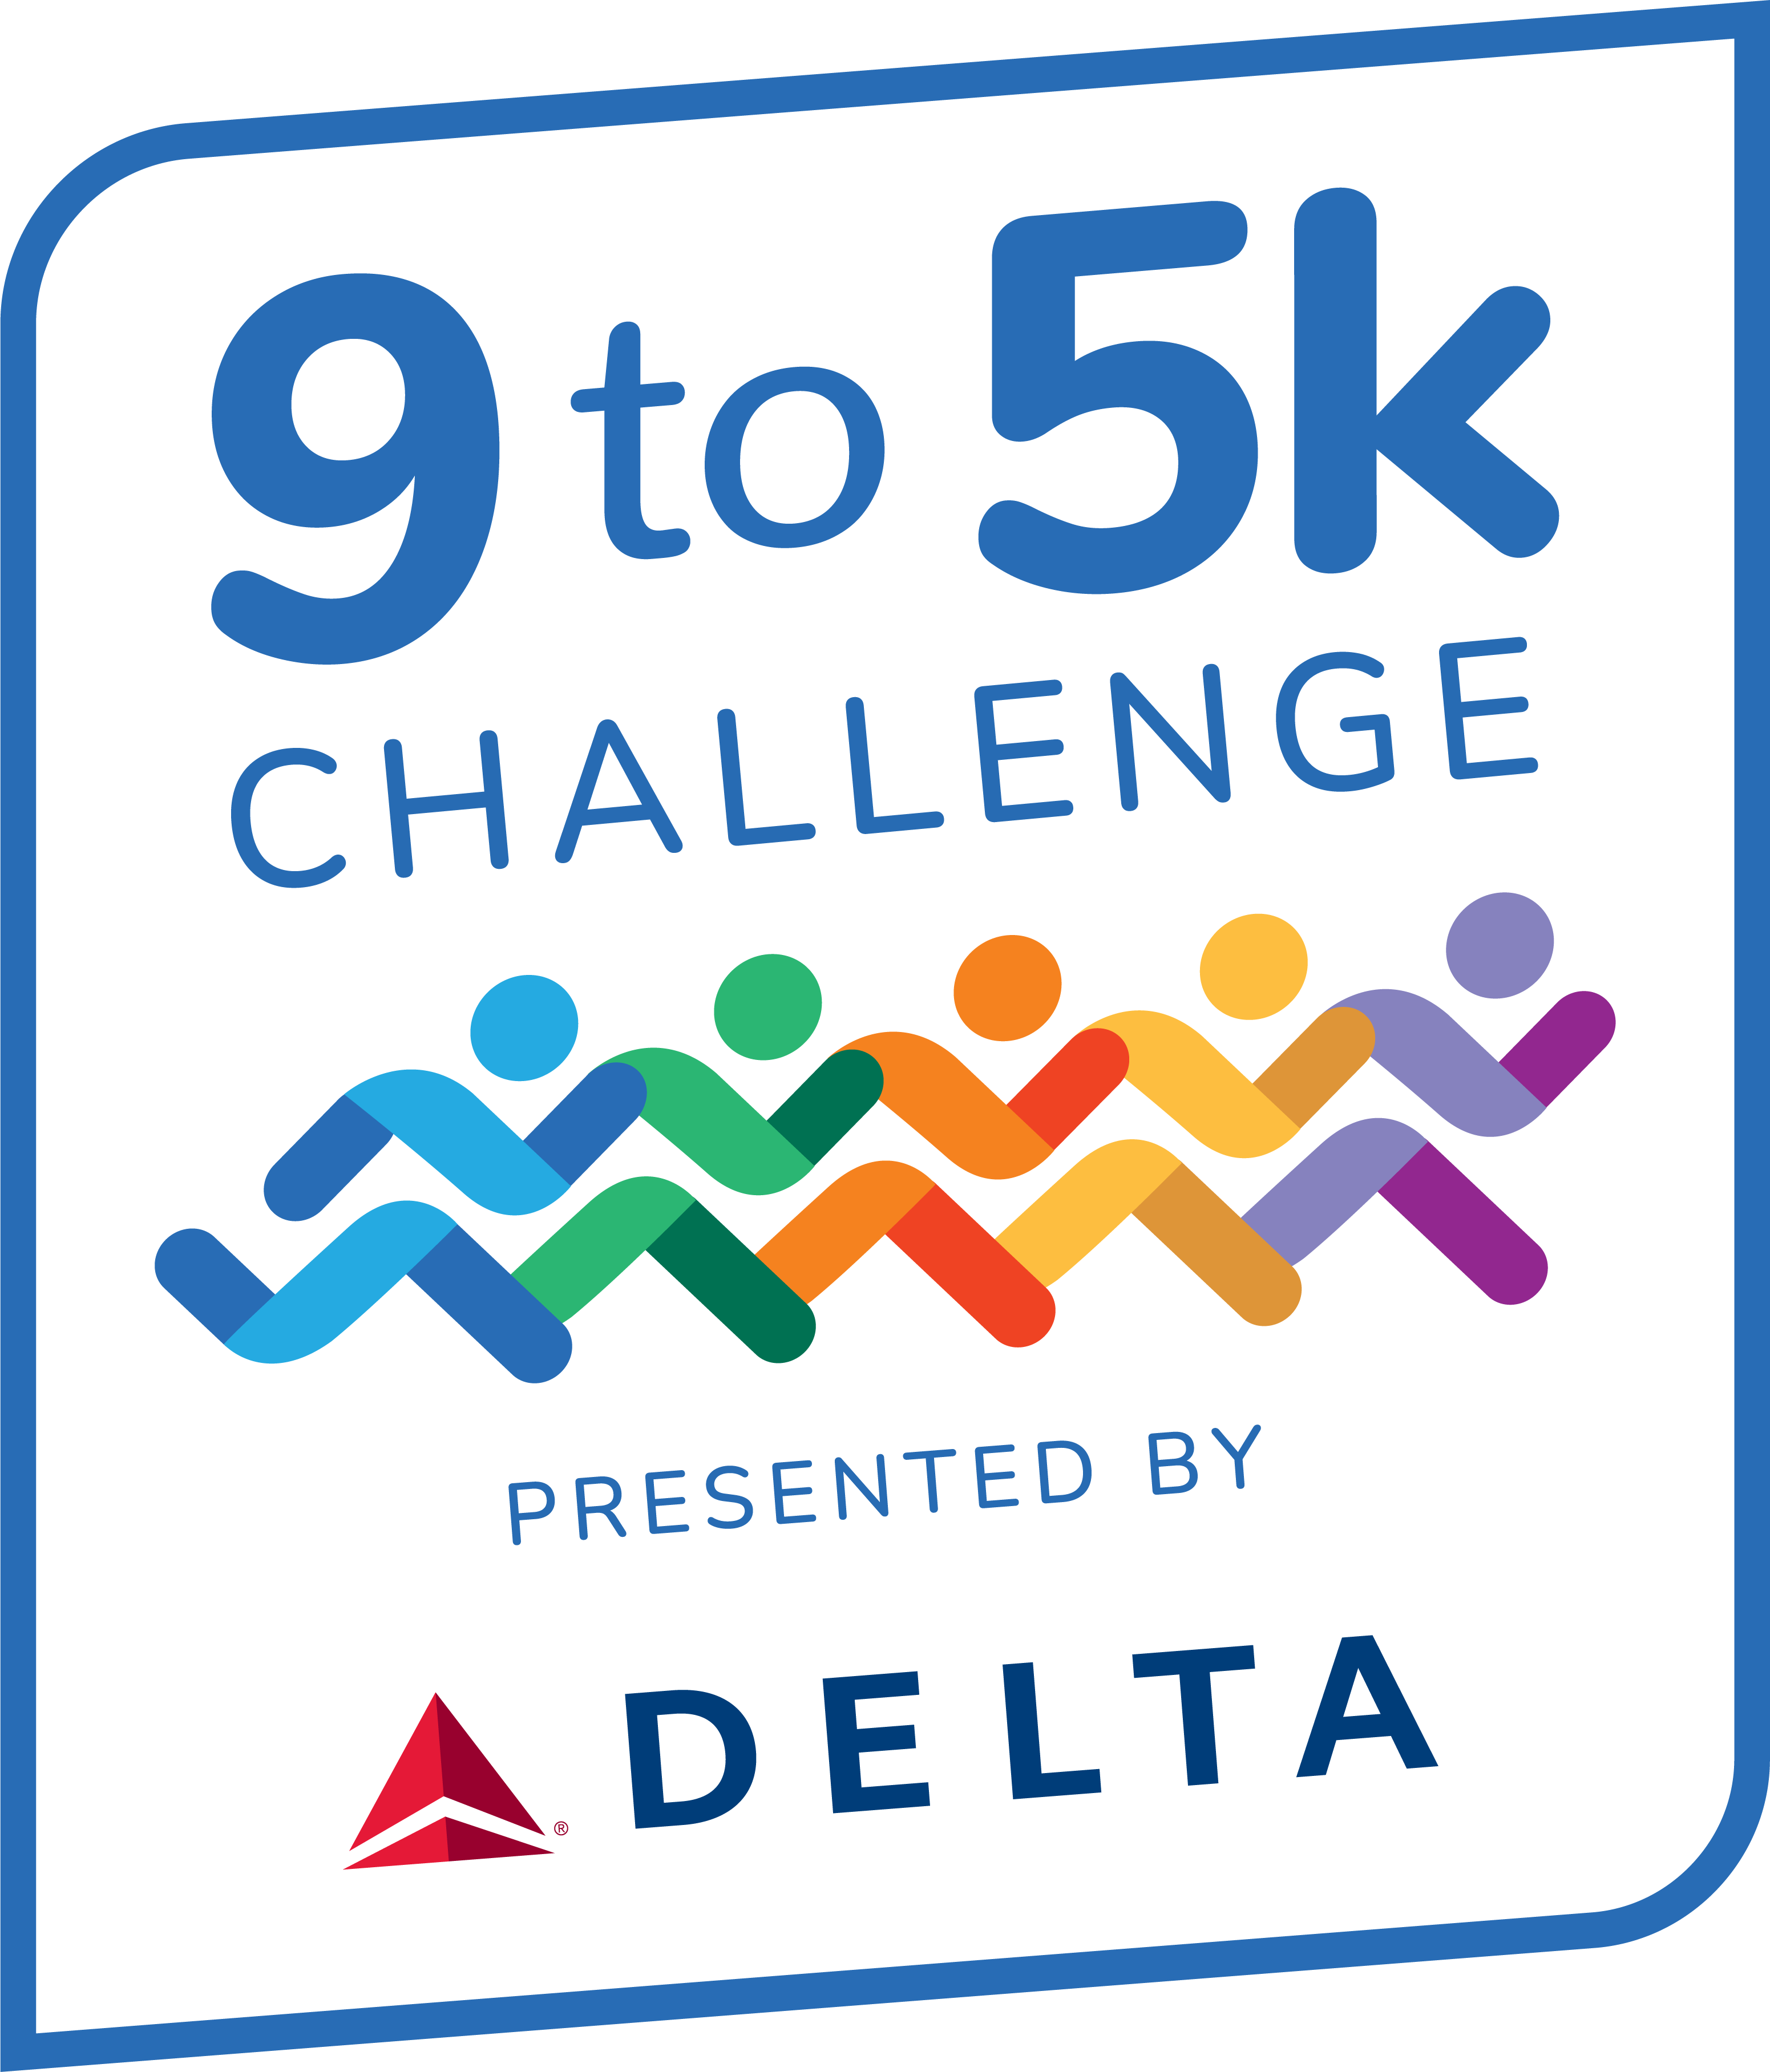 9 to 5k Challenge